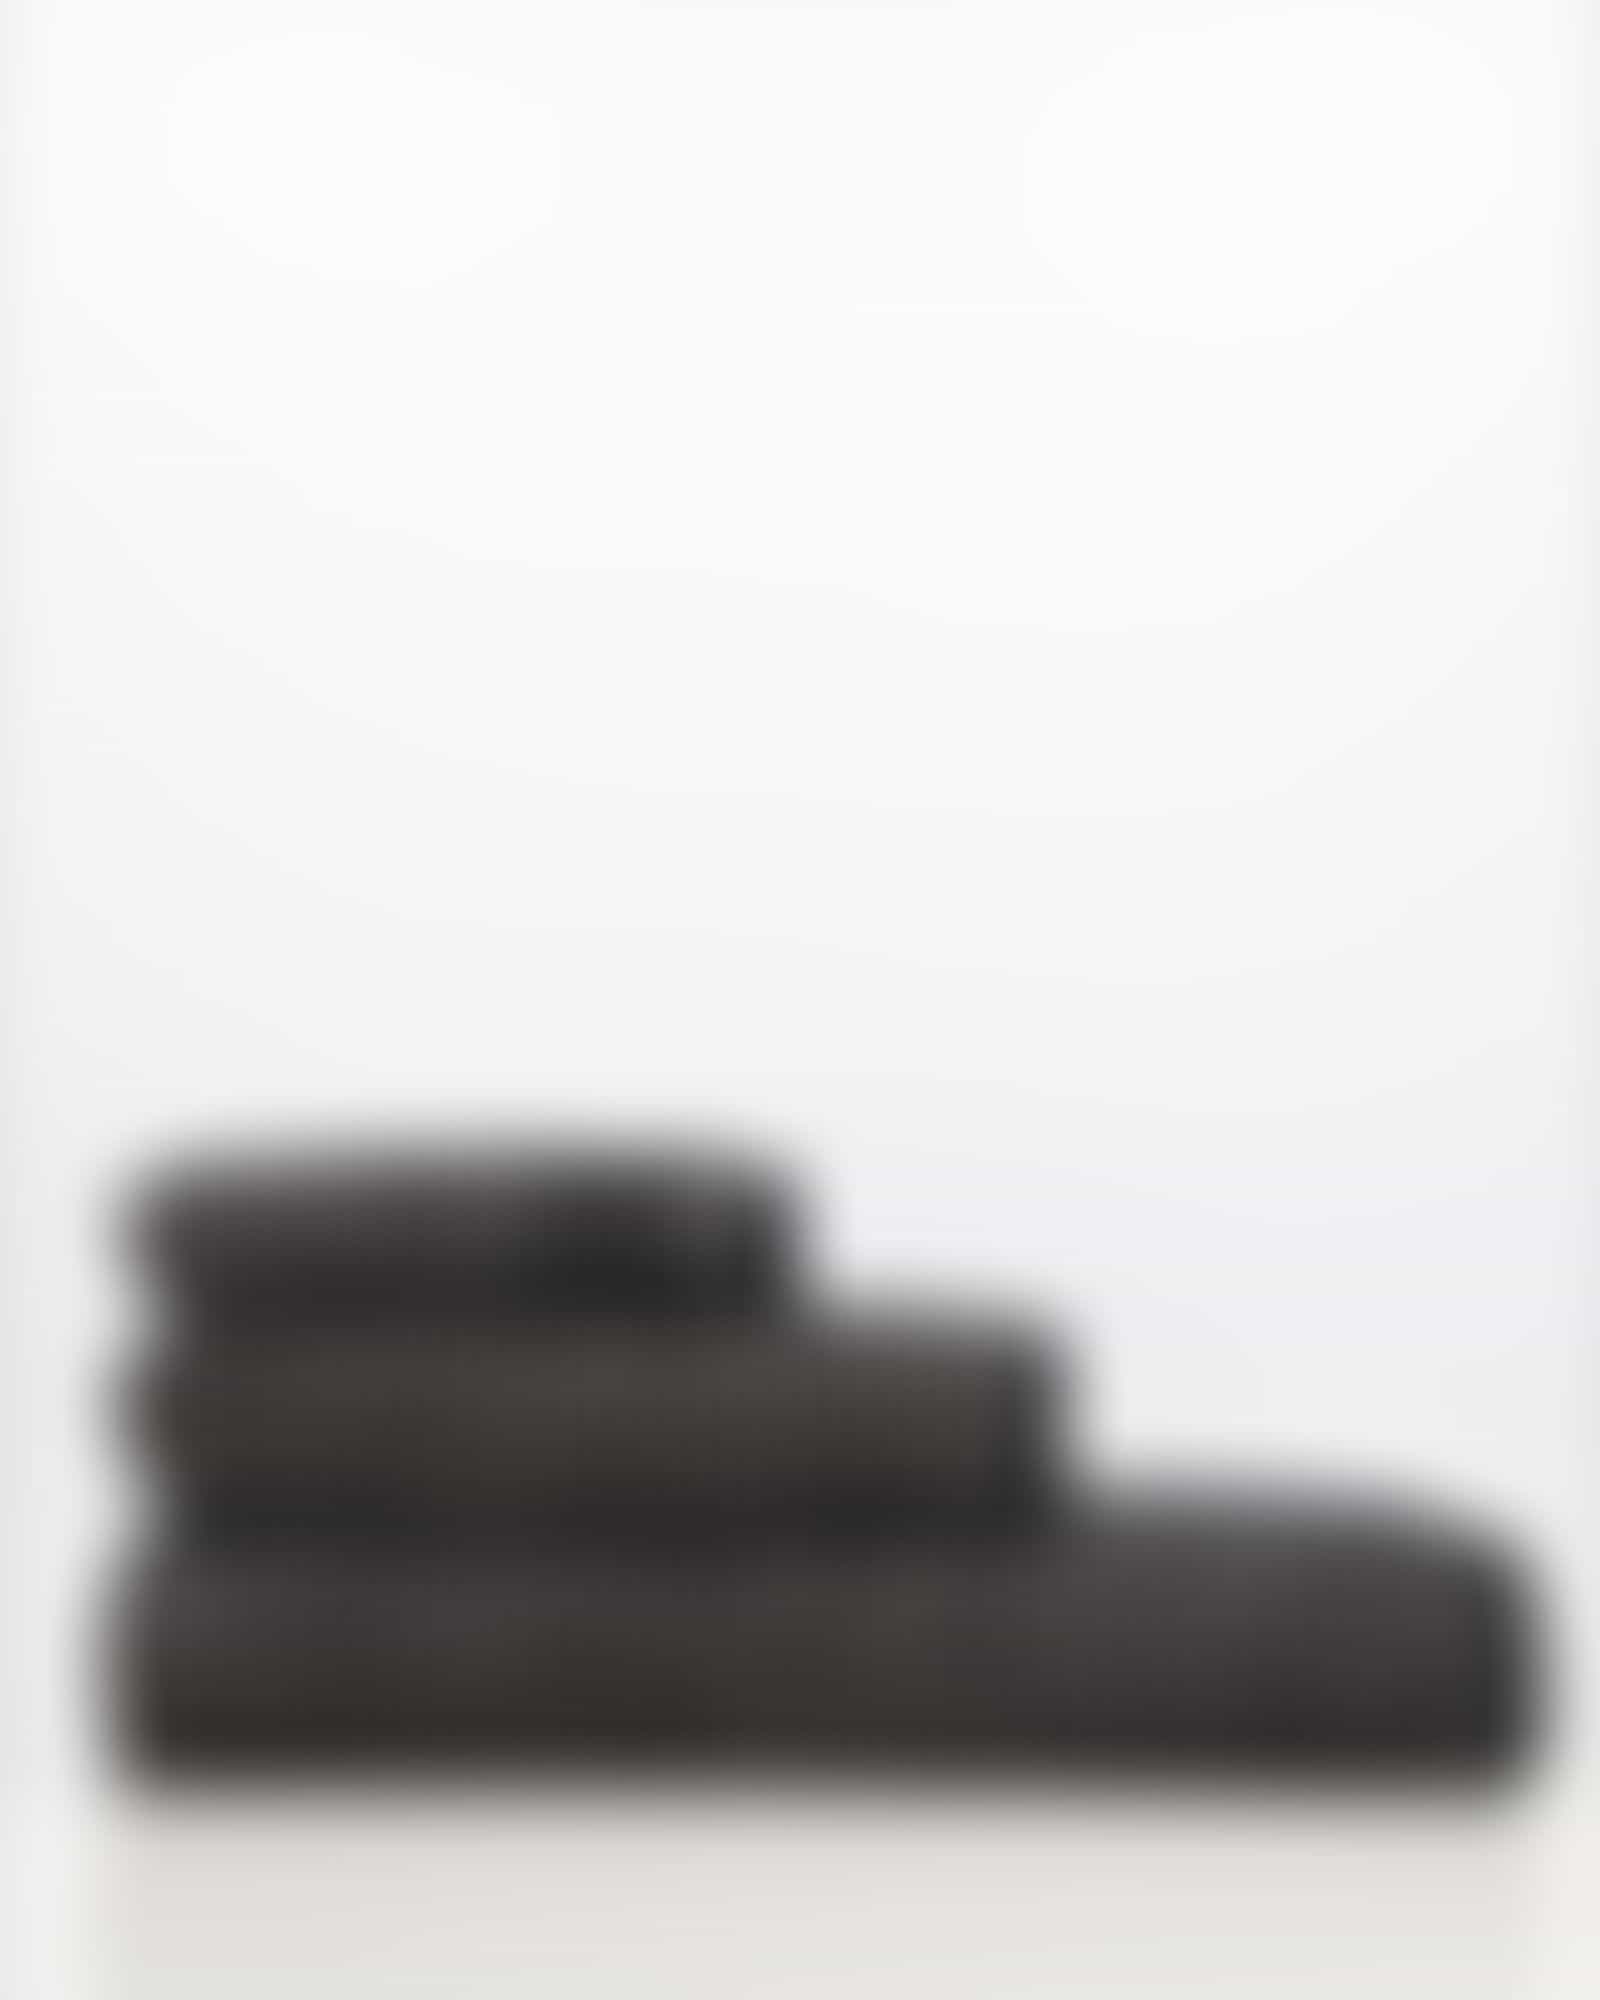 JOOP! Handtücher Select Allover 1695 - Farbe: ebony - 39 - Handtuch 50x100 cm